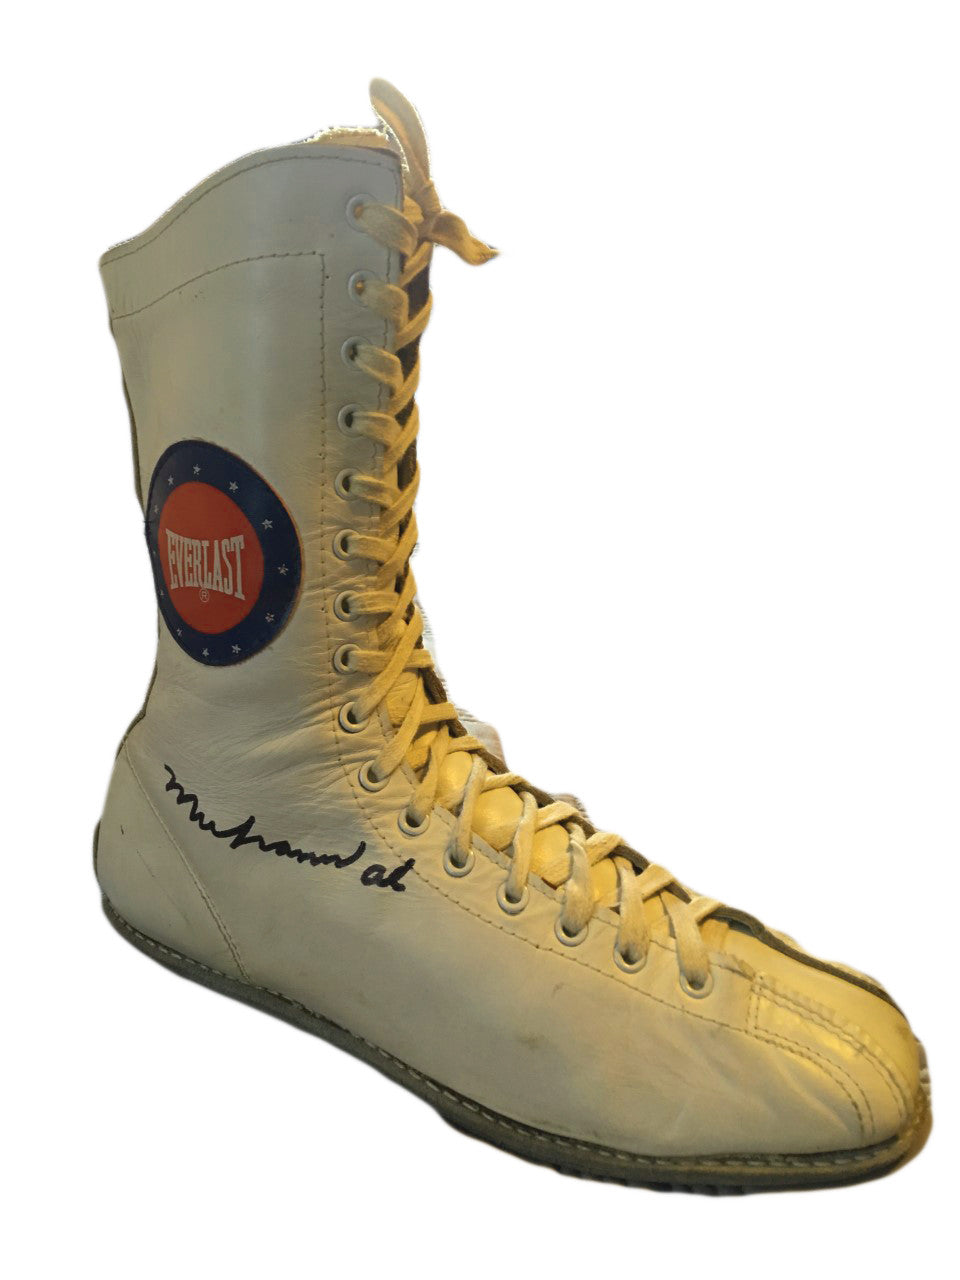 Muhammad Ali Autographed Rare Vintage Everlast white Boxing Boot